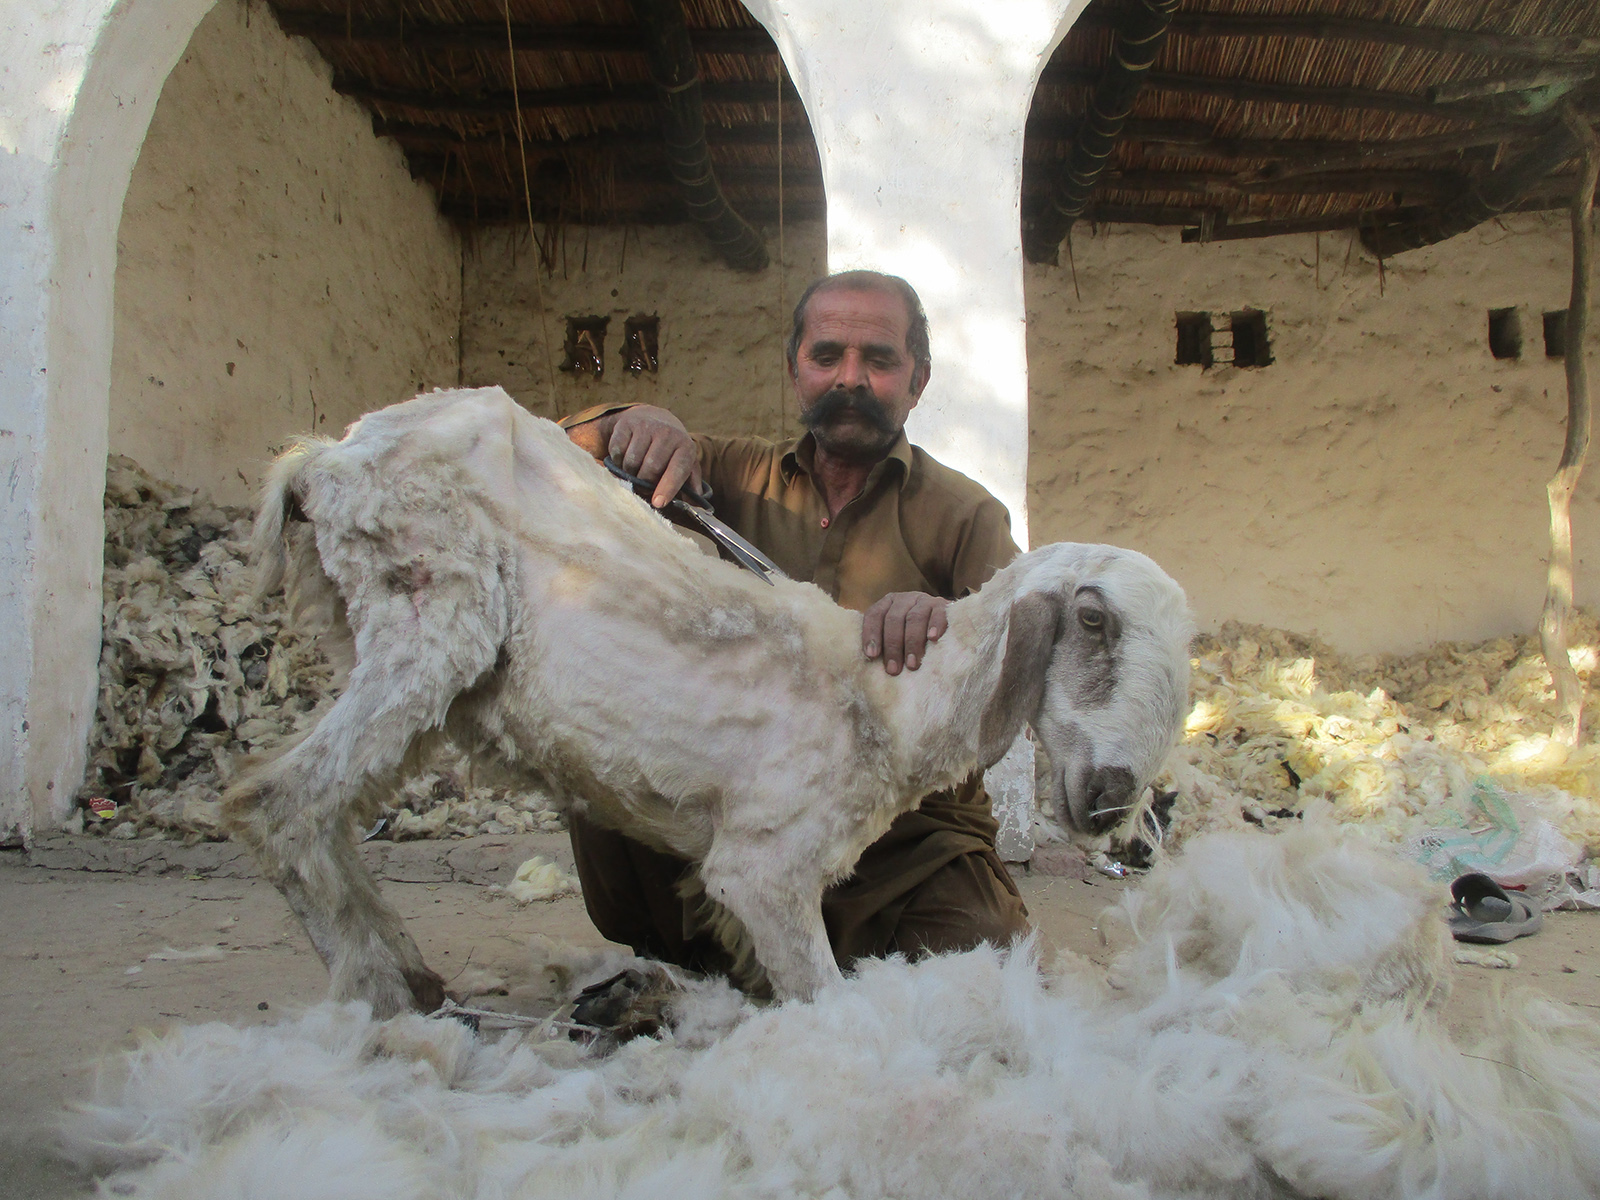 Meghwar is  busy shearing a sheep